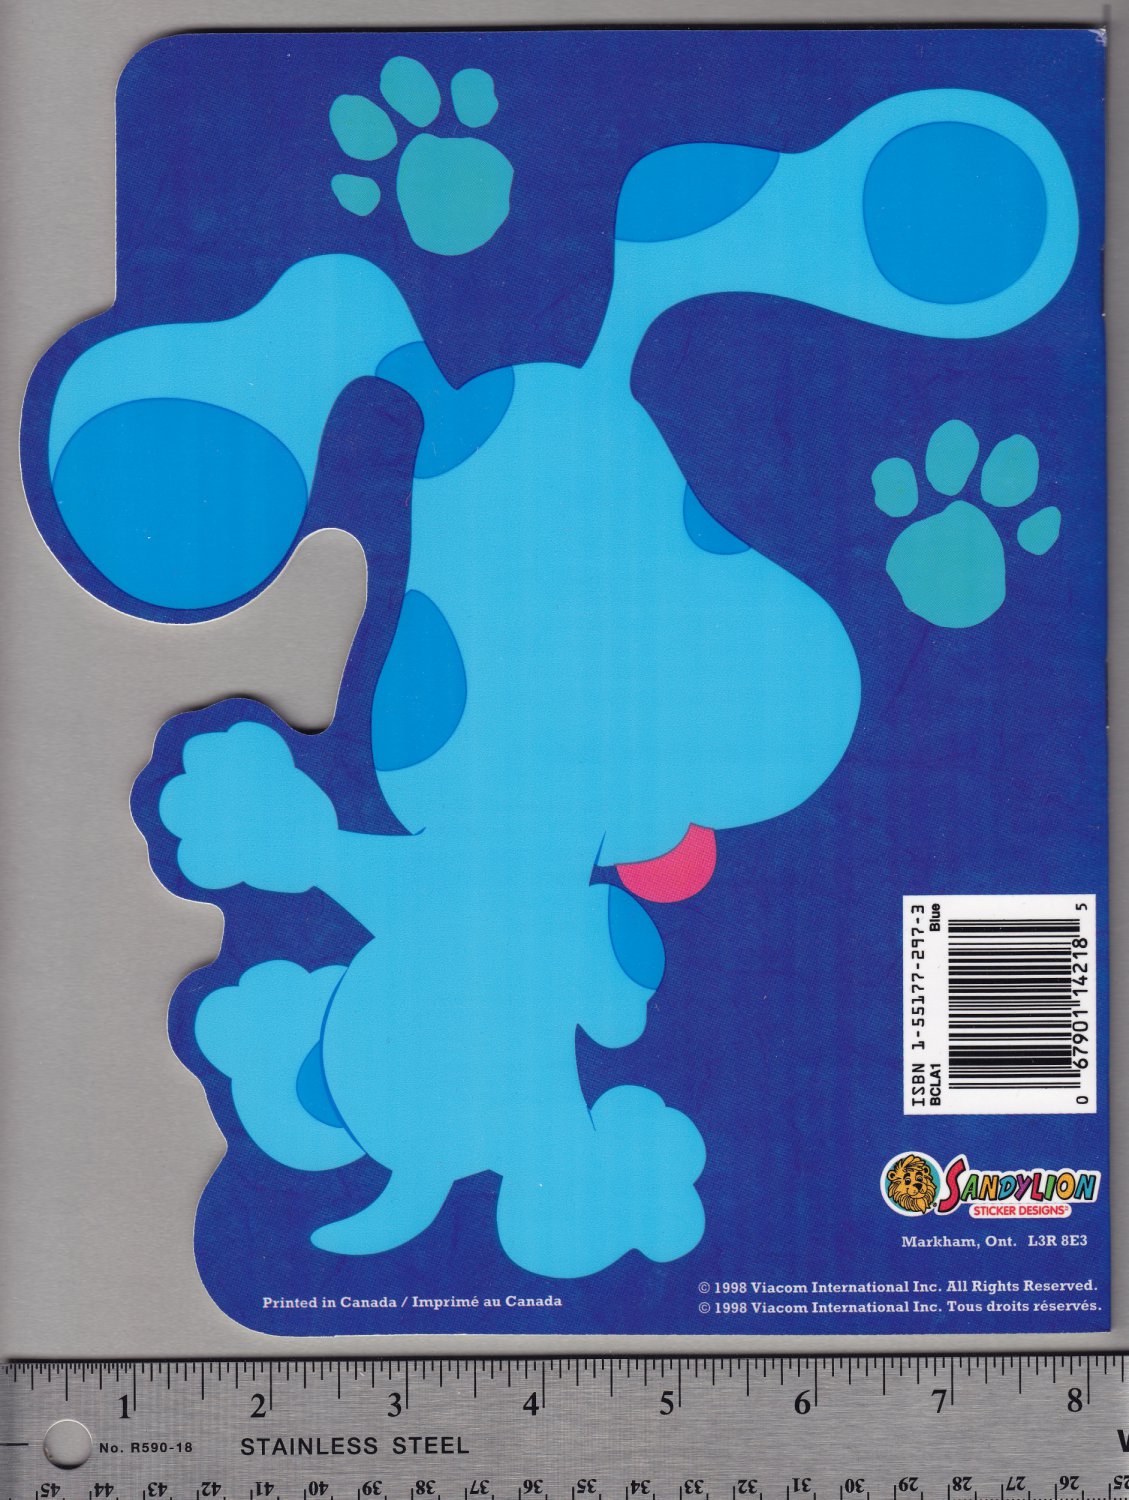 Sandylion Sticker Book Album Blues Clues Nickelodeon Nick Jr